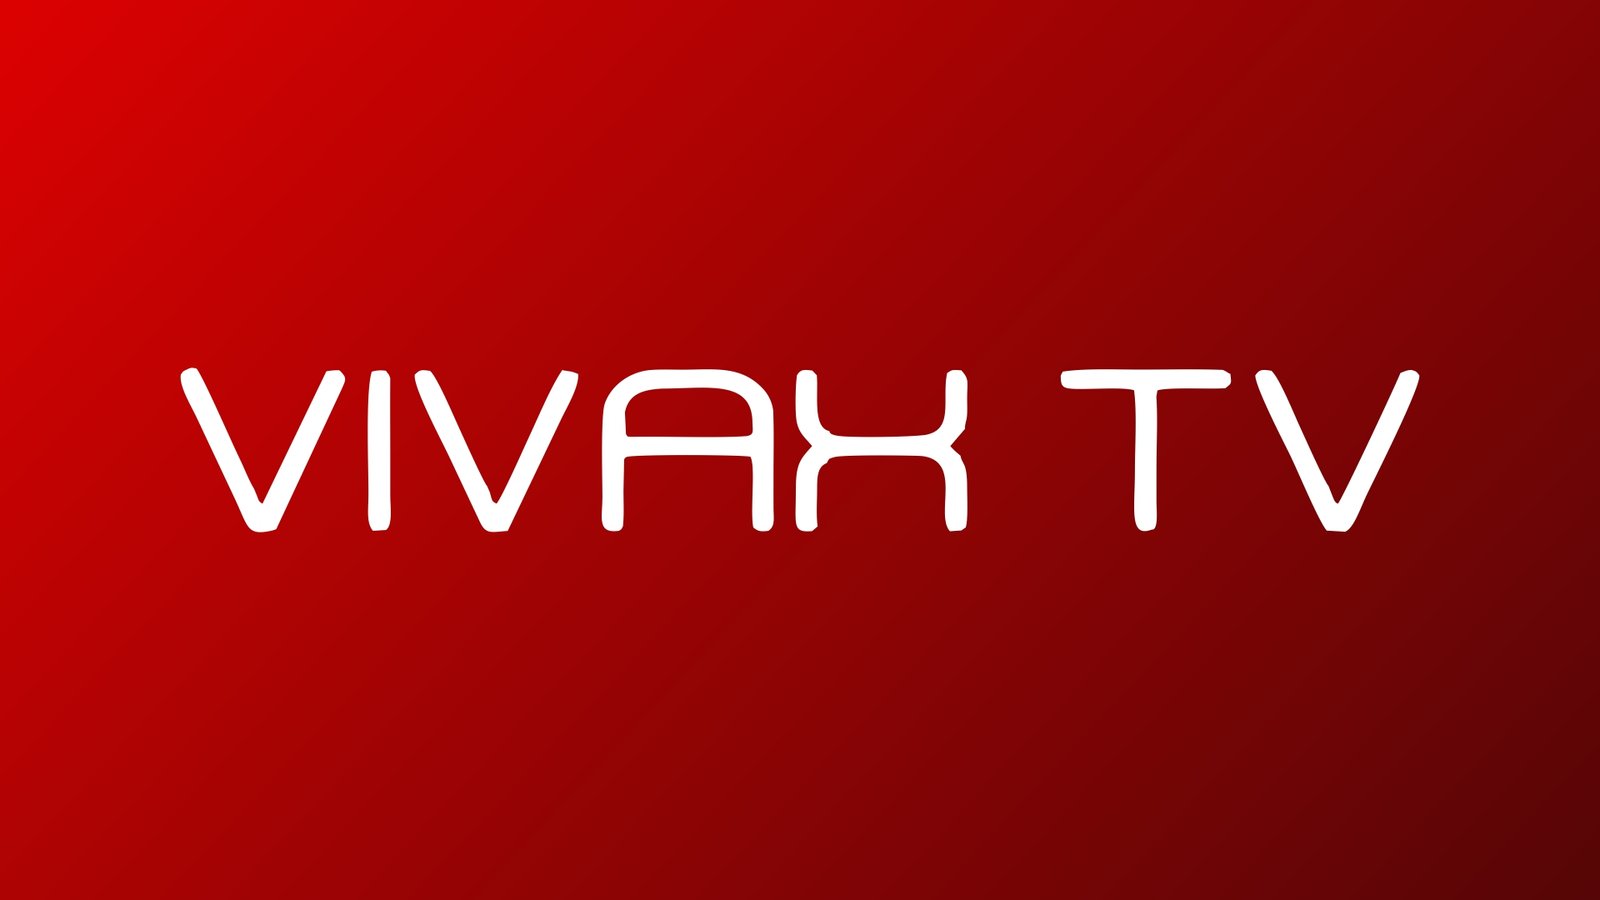 VIVAX TV - CANAL 185